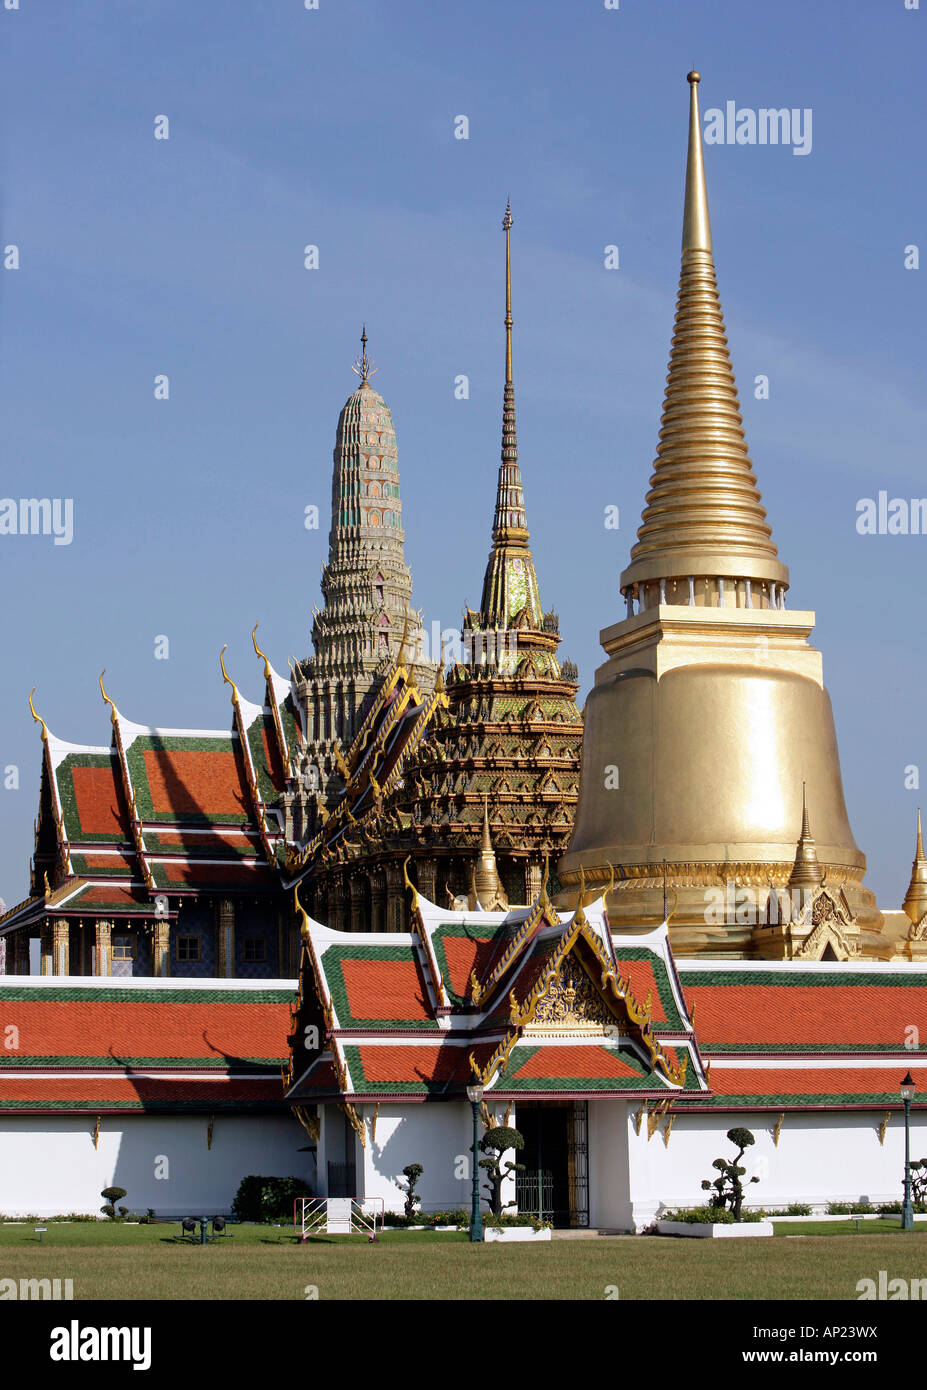 Thailand, Bangkok, Grand Palace Wat Phra Kaeo Stock Photo